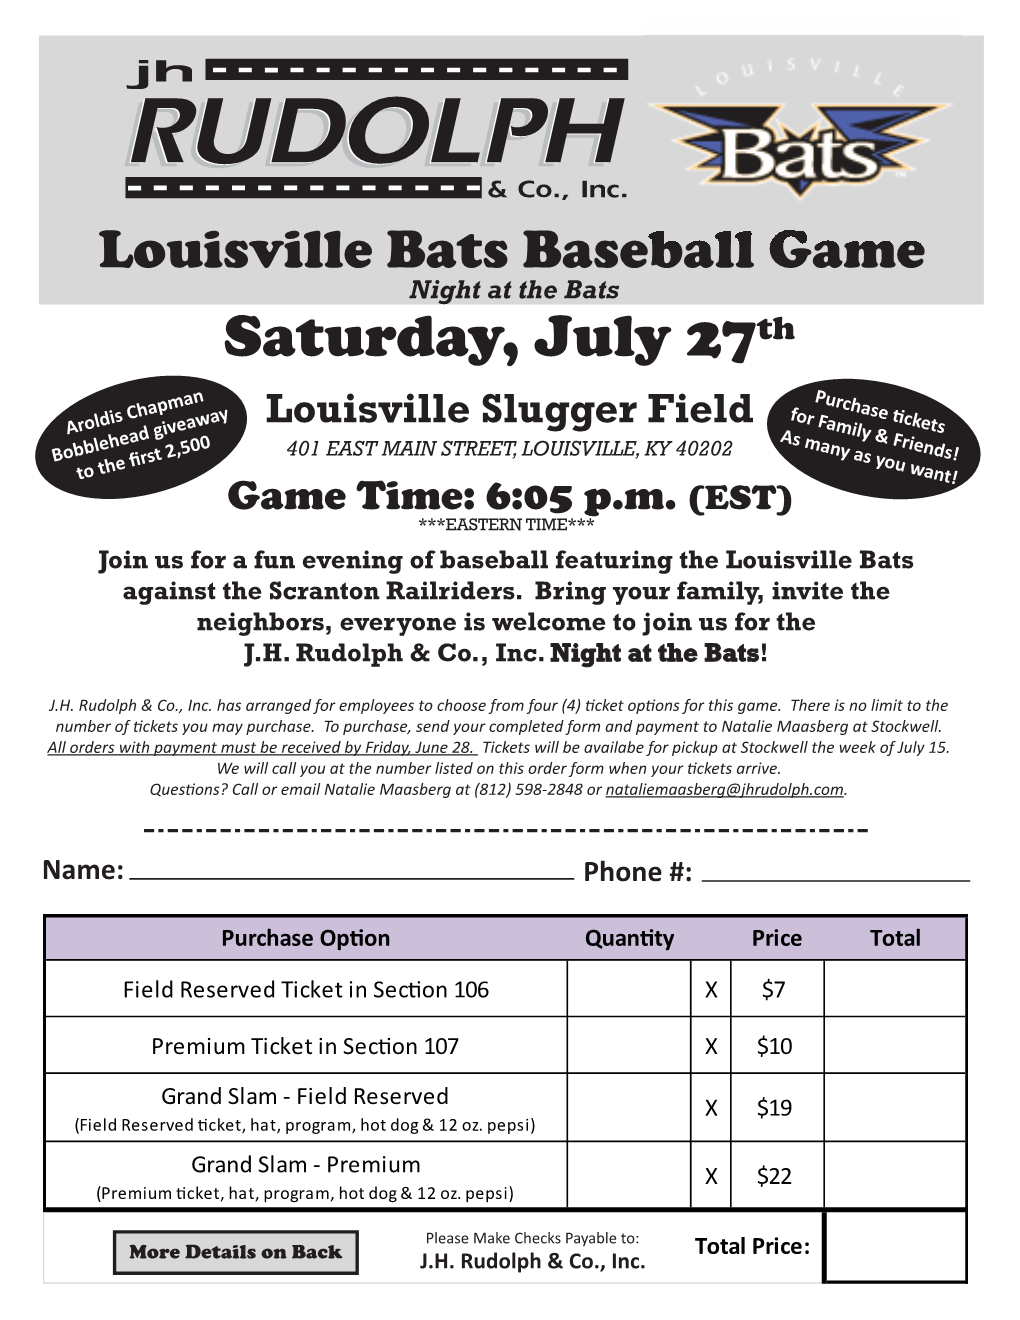 JHR Louisville Bats Employee Game Night Saturday, July 27 2013